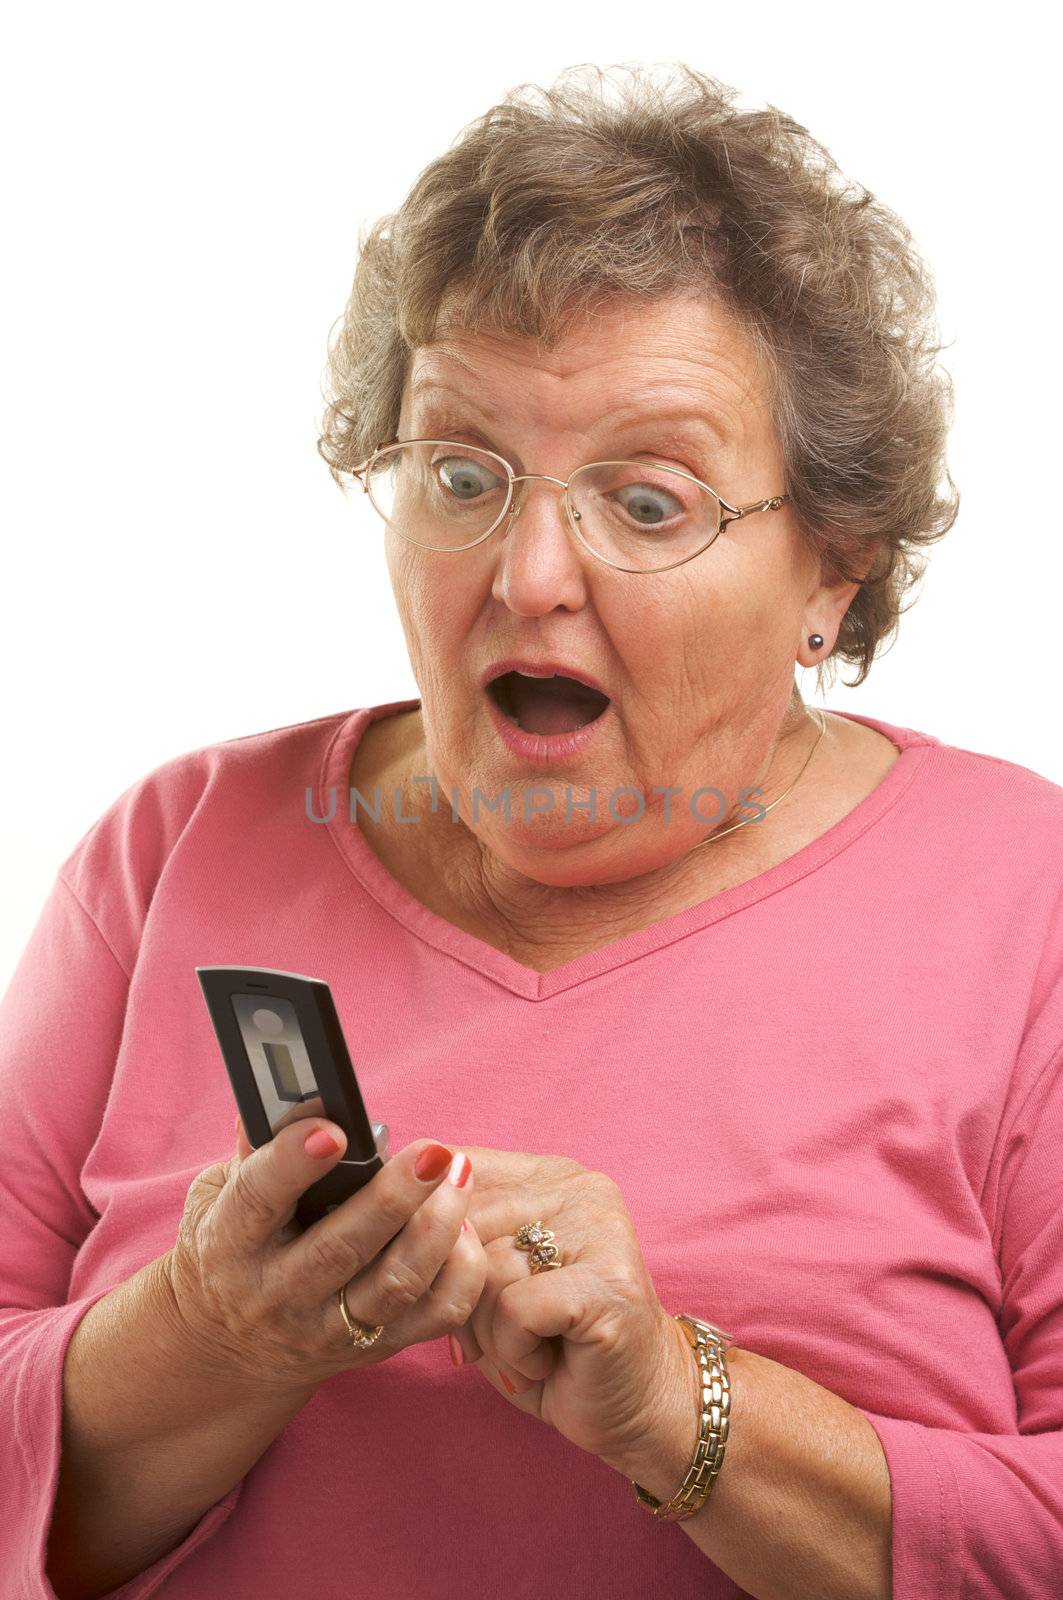 Senior Woman Using Cell Phone